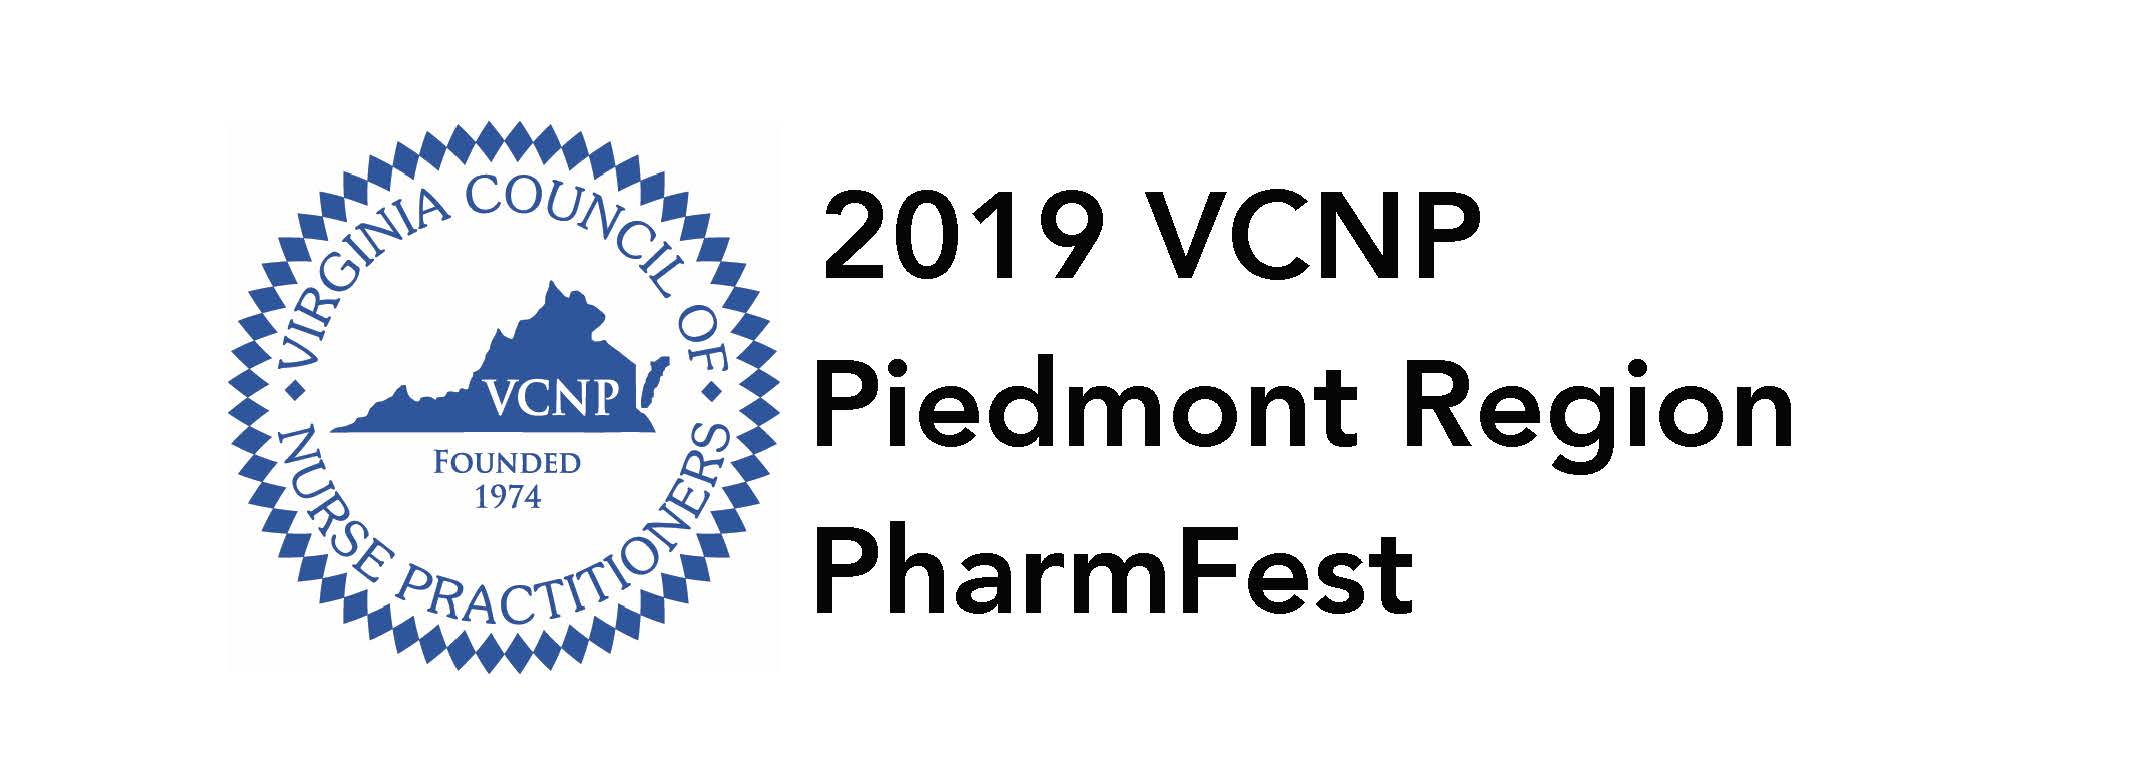 2019 Piedmont PharmFest,
                        January 26 - January 26, 2019
                        , The Boar